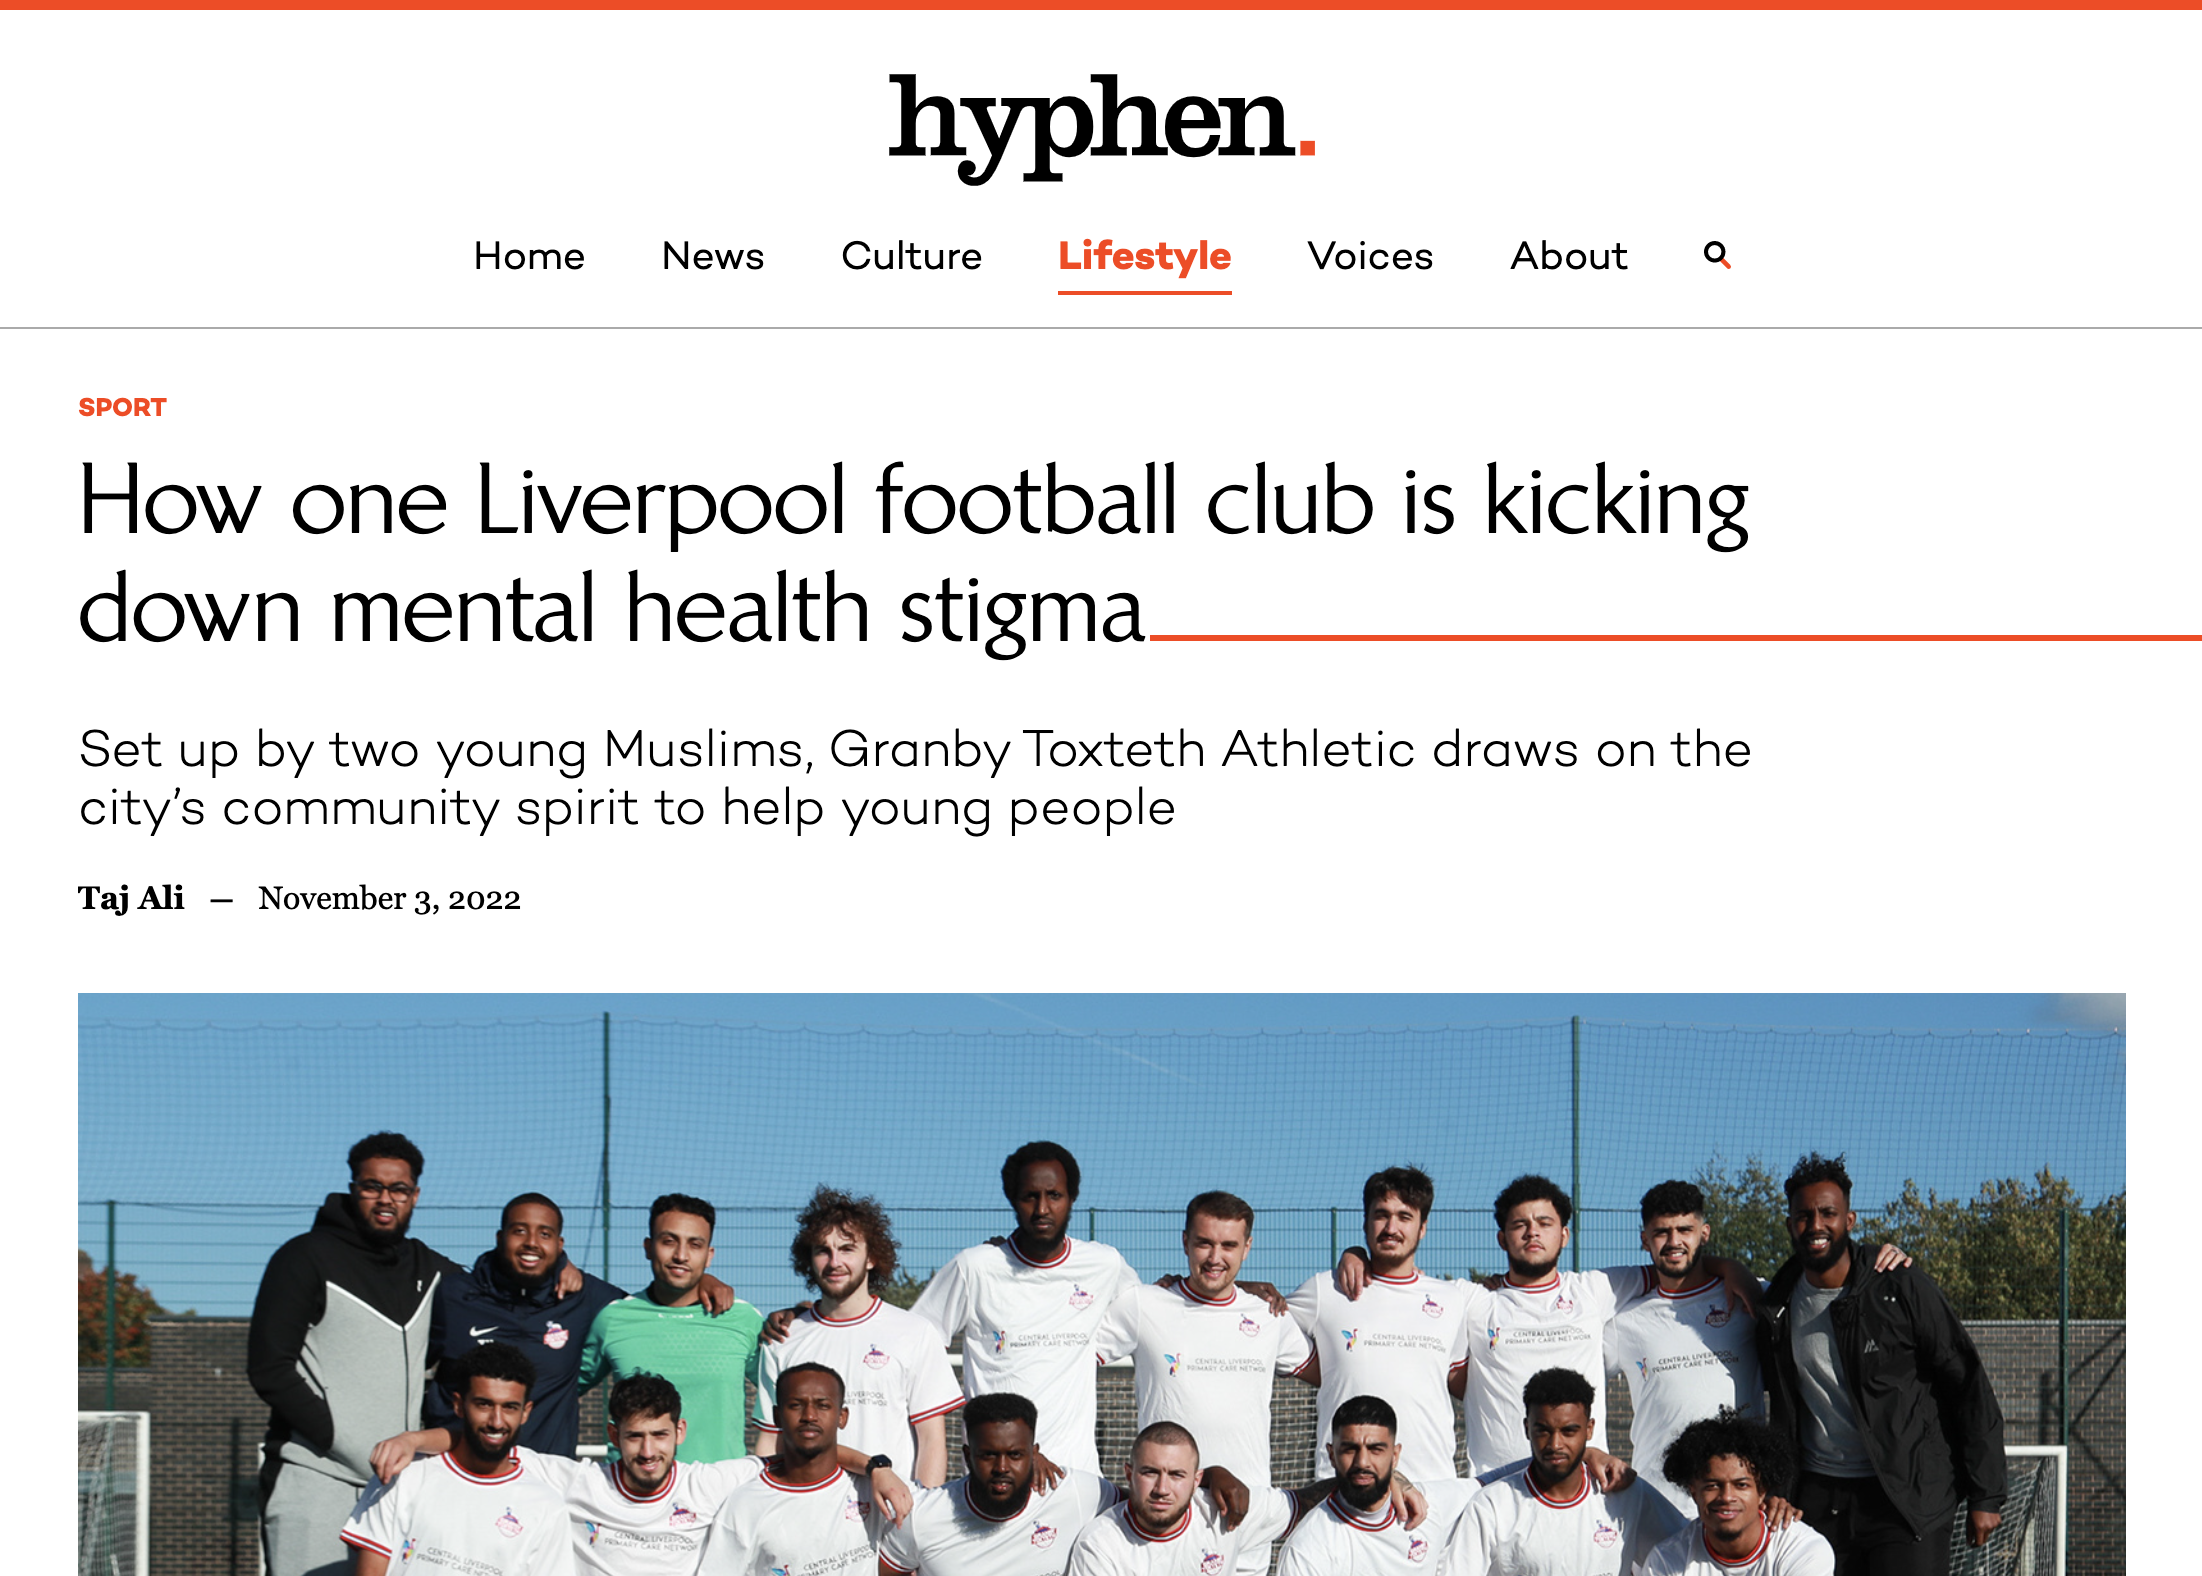 a story of Taj's on hyphen. the headline reads 'How one Liverpool football club is kicking down mental health stigma'